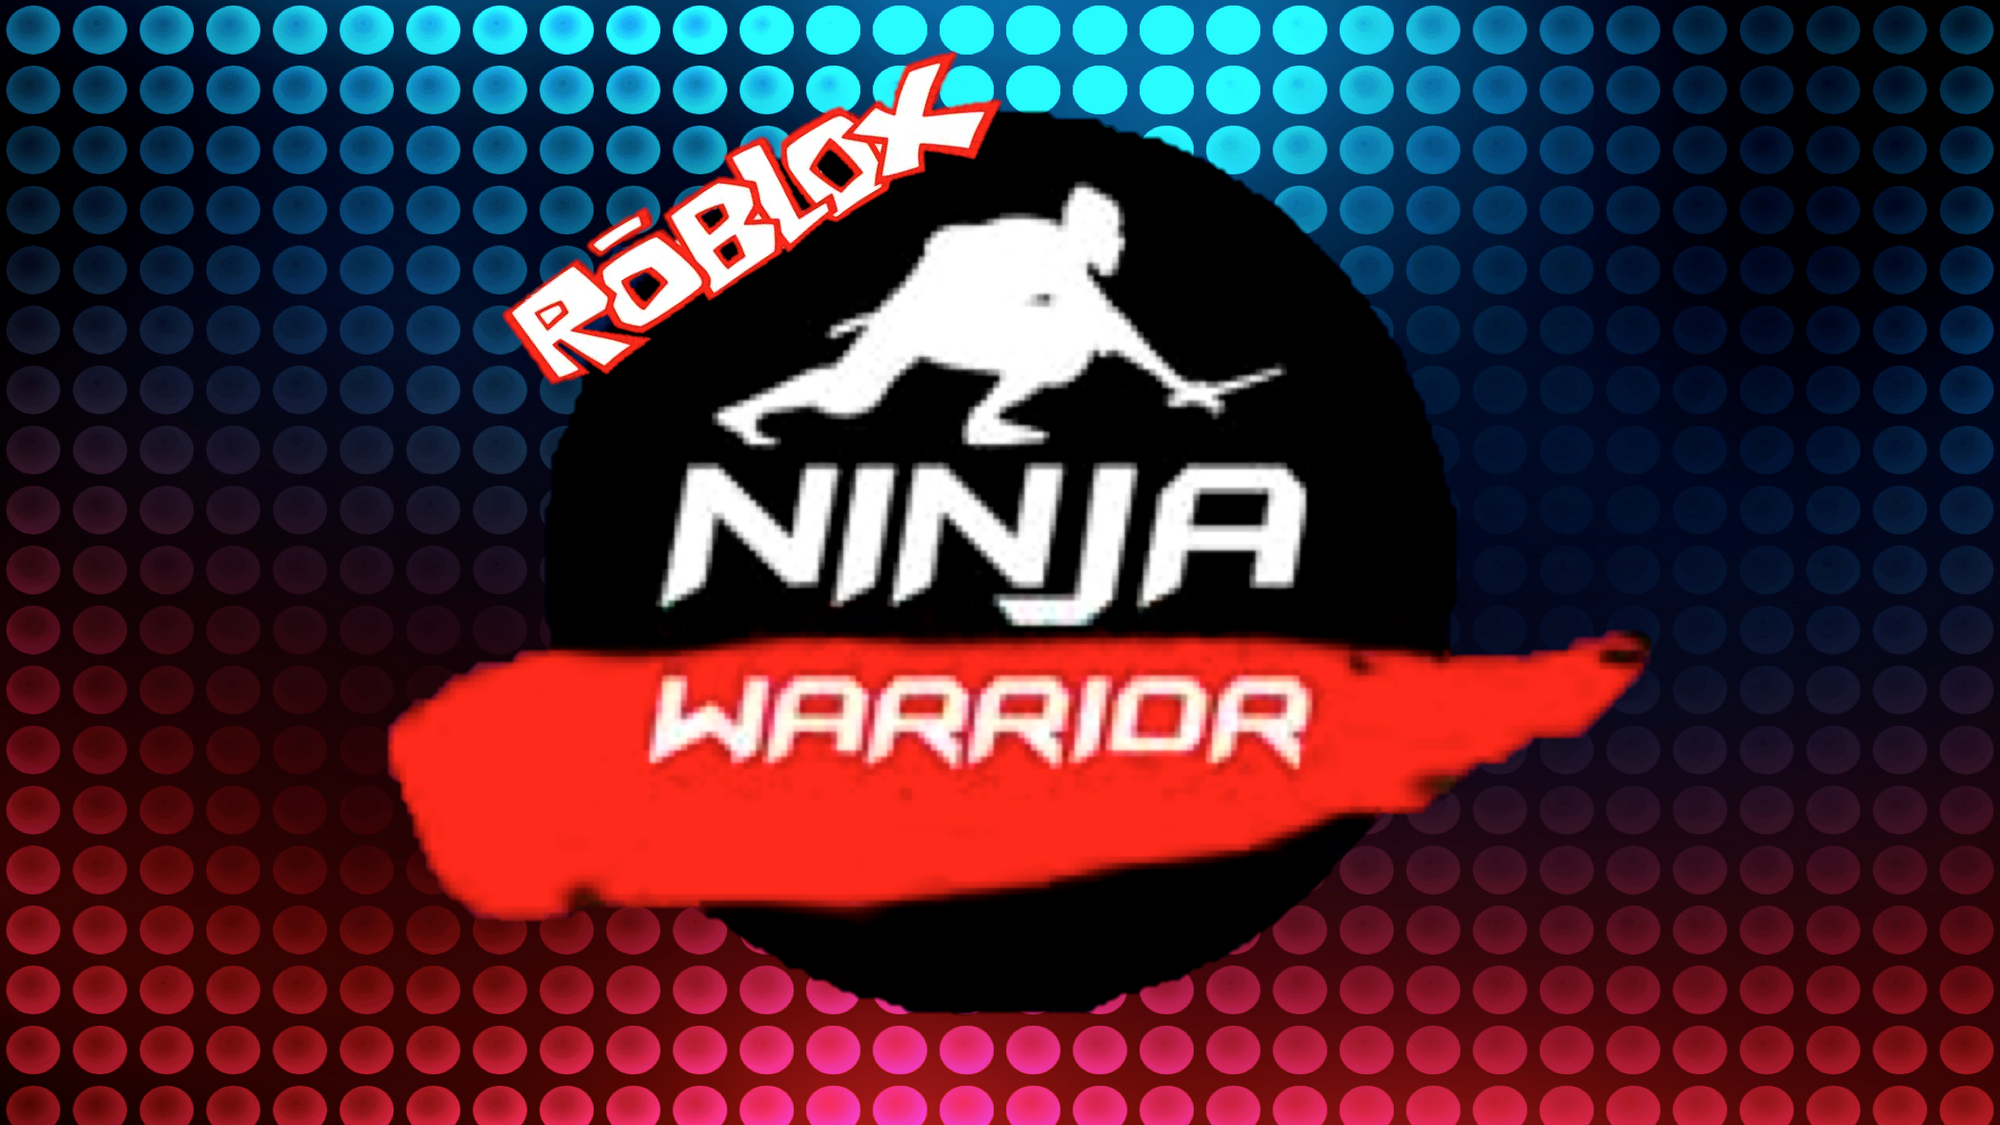 Roblox Ninja Warrior Custom Sasukepedia Wiki Fandom Powered By Wikia - american ninja warrior roblox